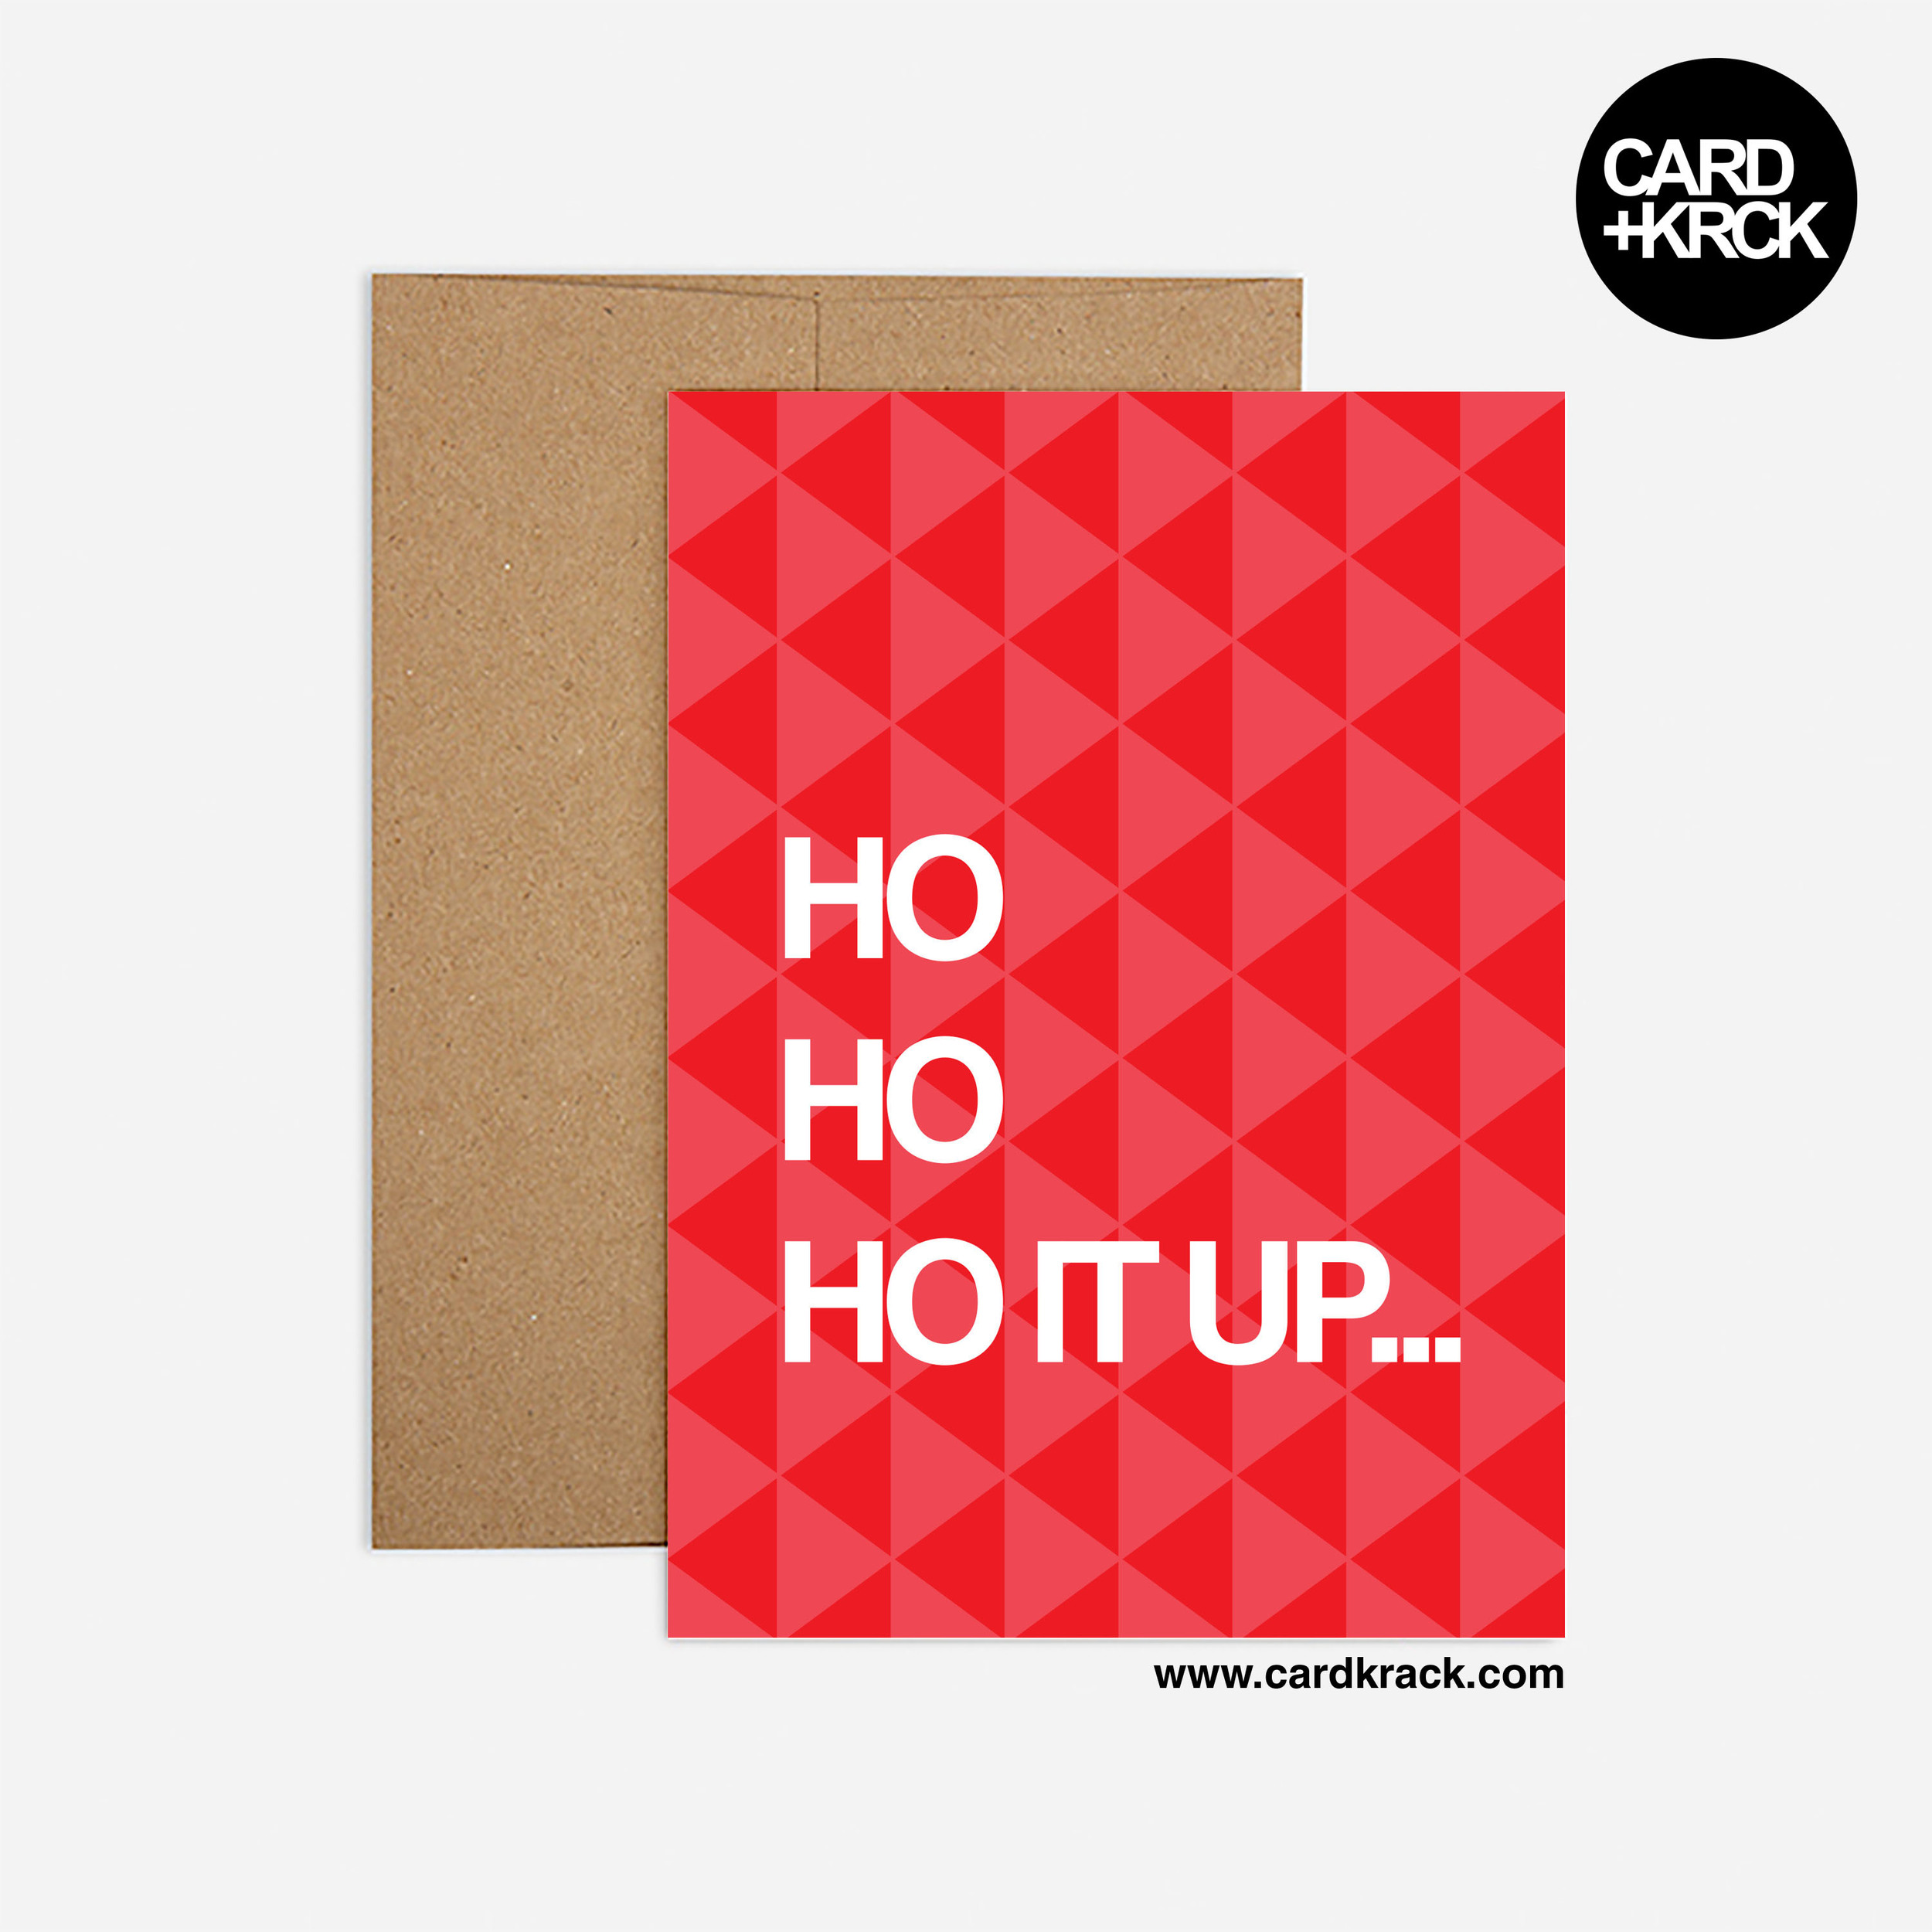 Card Template_Ho Ho Ho It Up.jpg